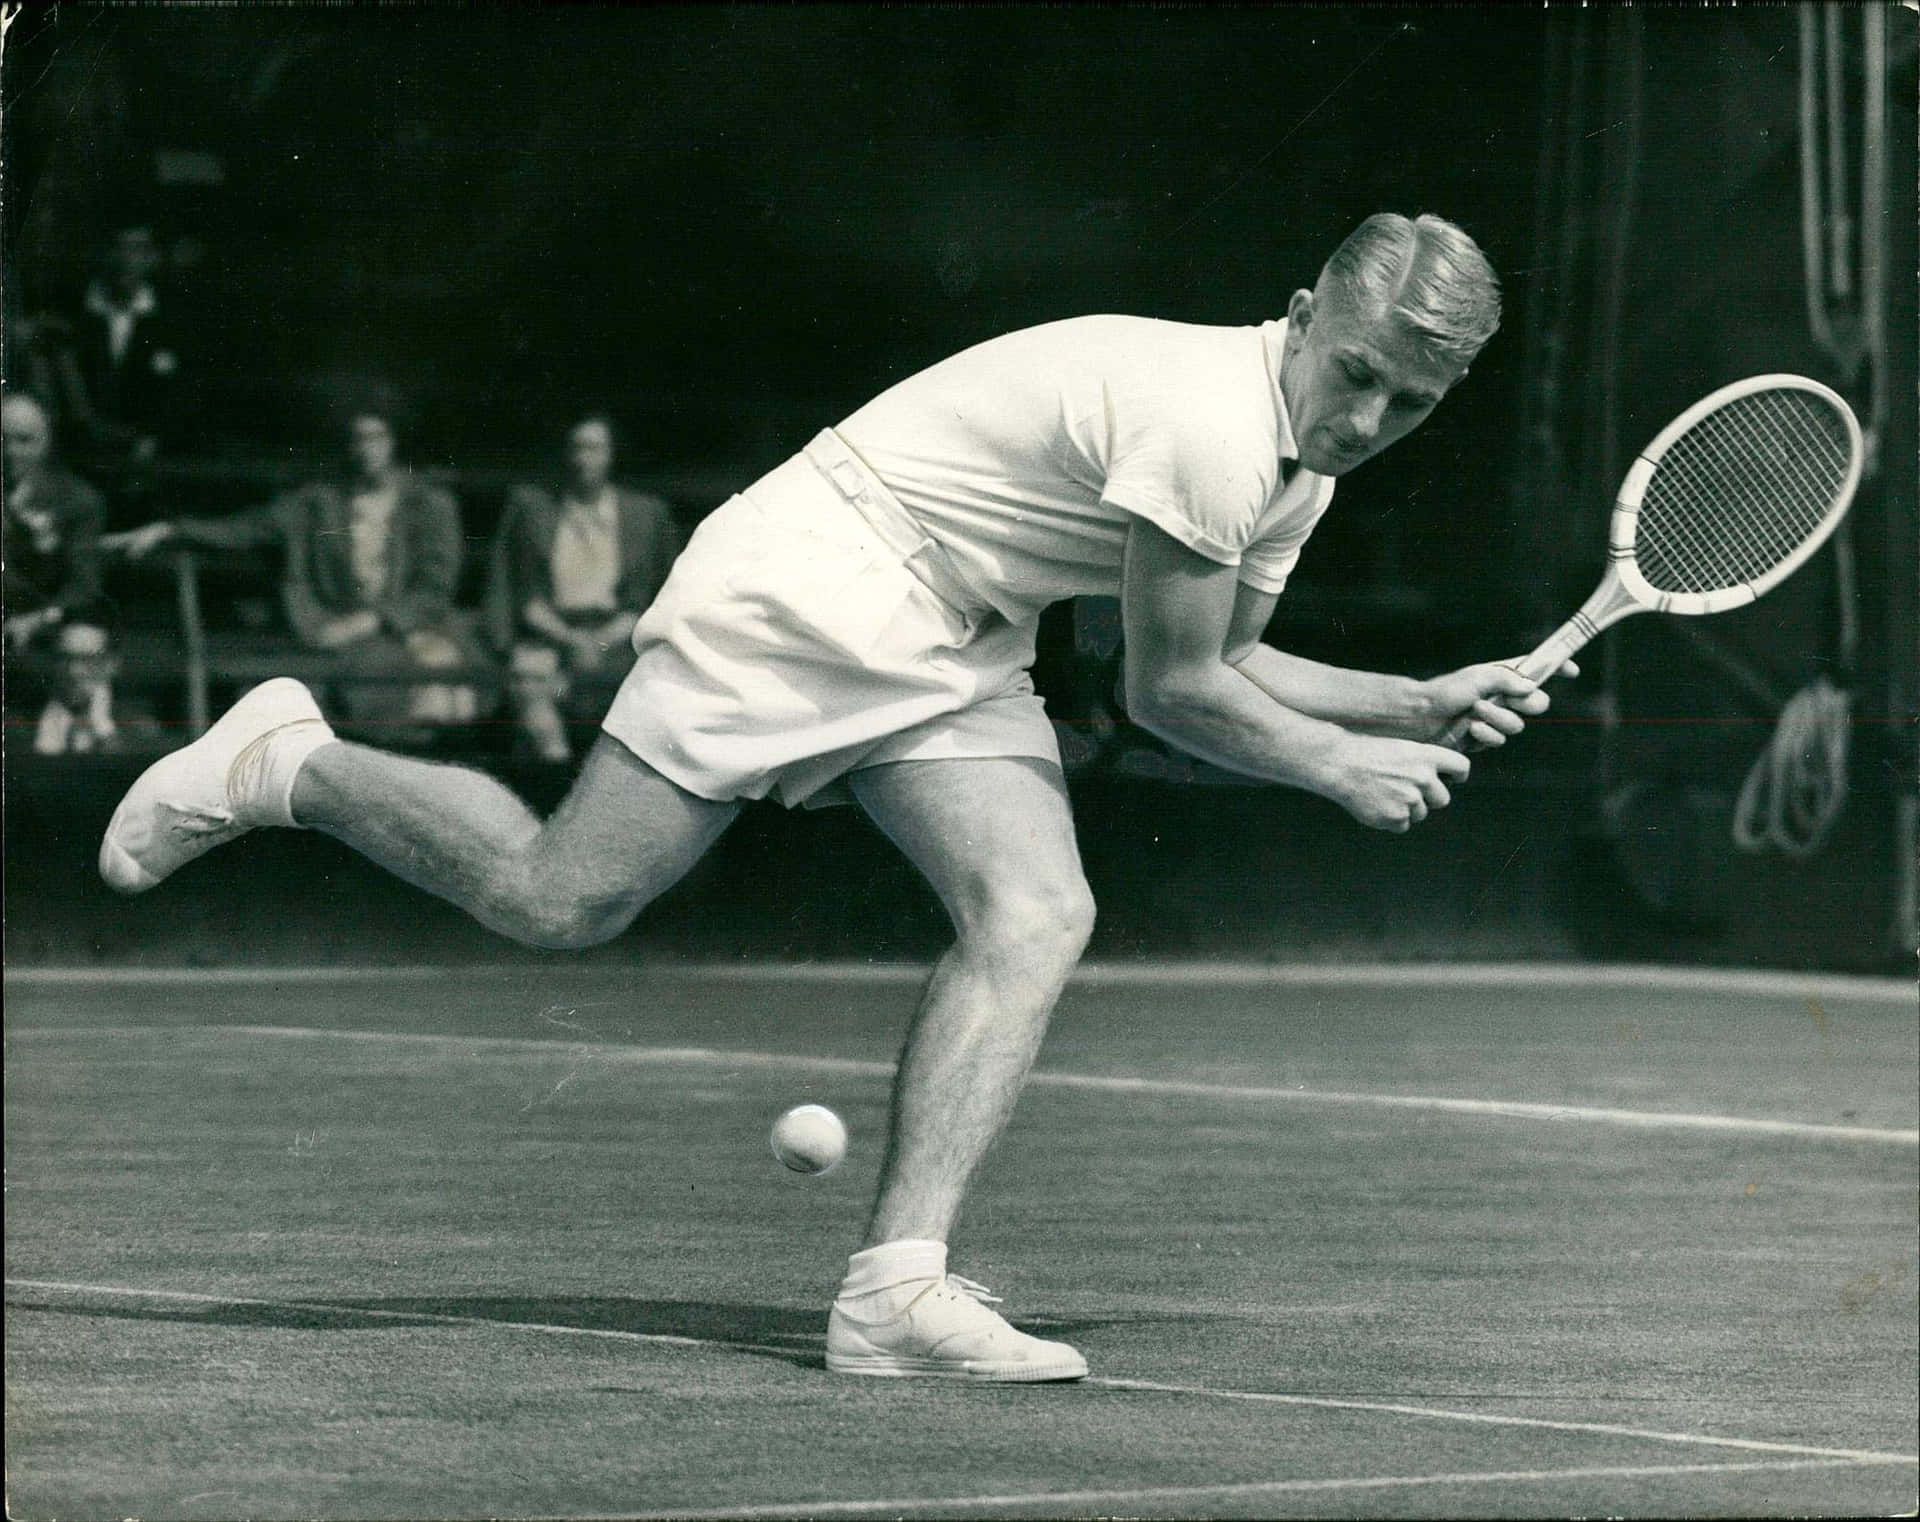 Monokromaustralisk Tennisspelare Lew Hoad. Wallpaper